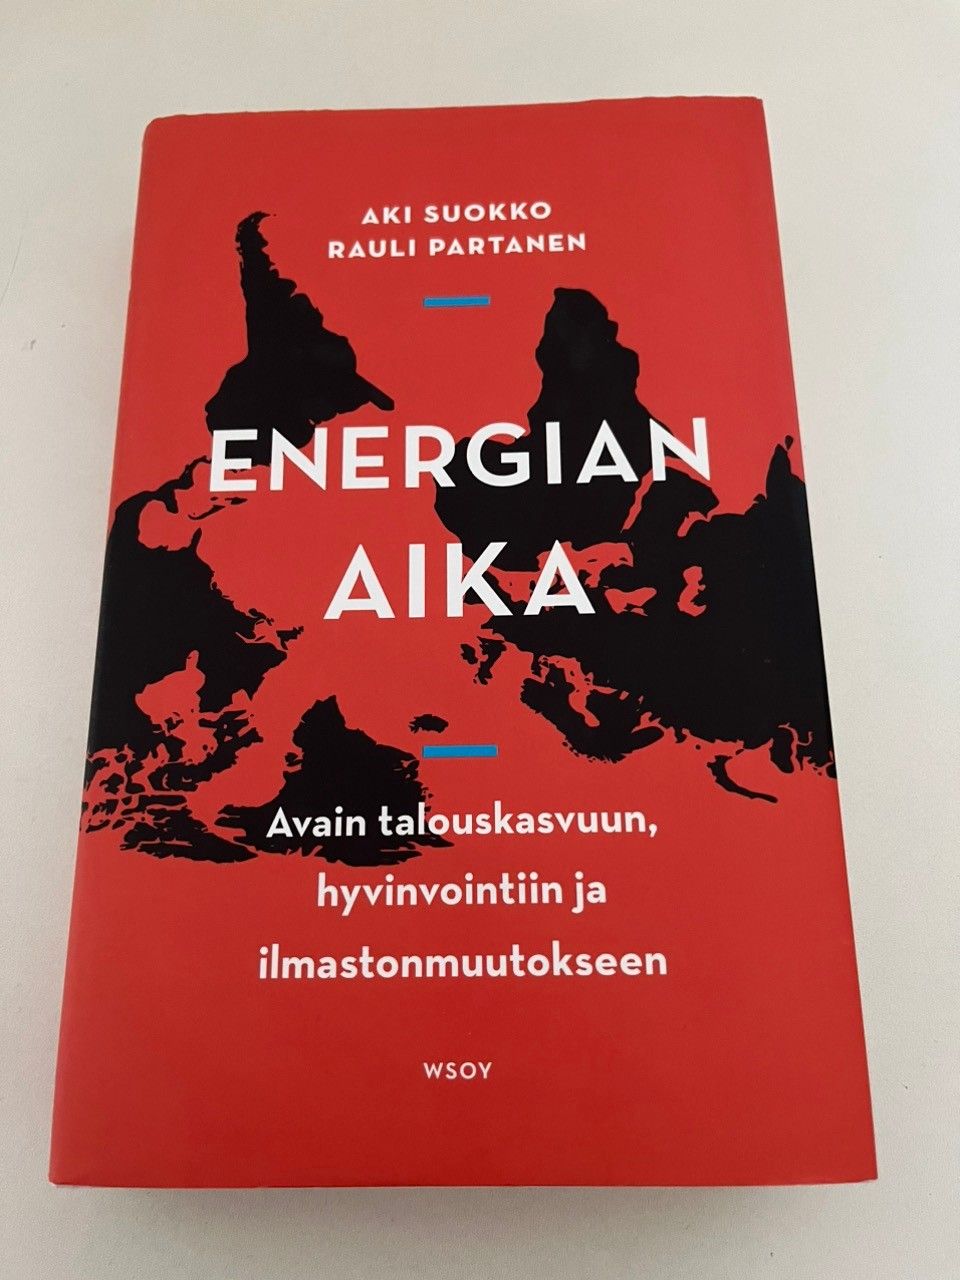 Energian aika; Aki Suokko, Rauli Partanen